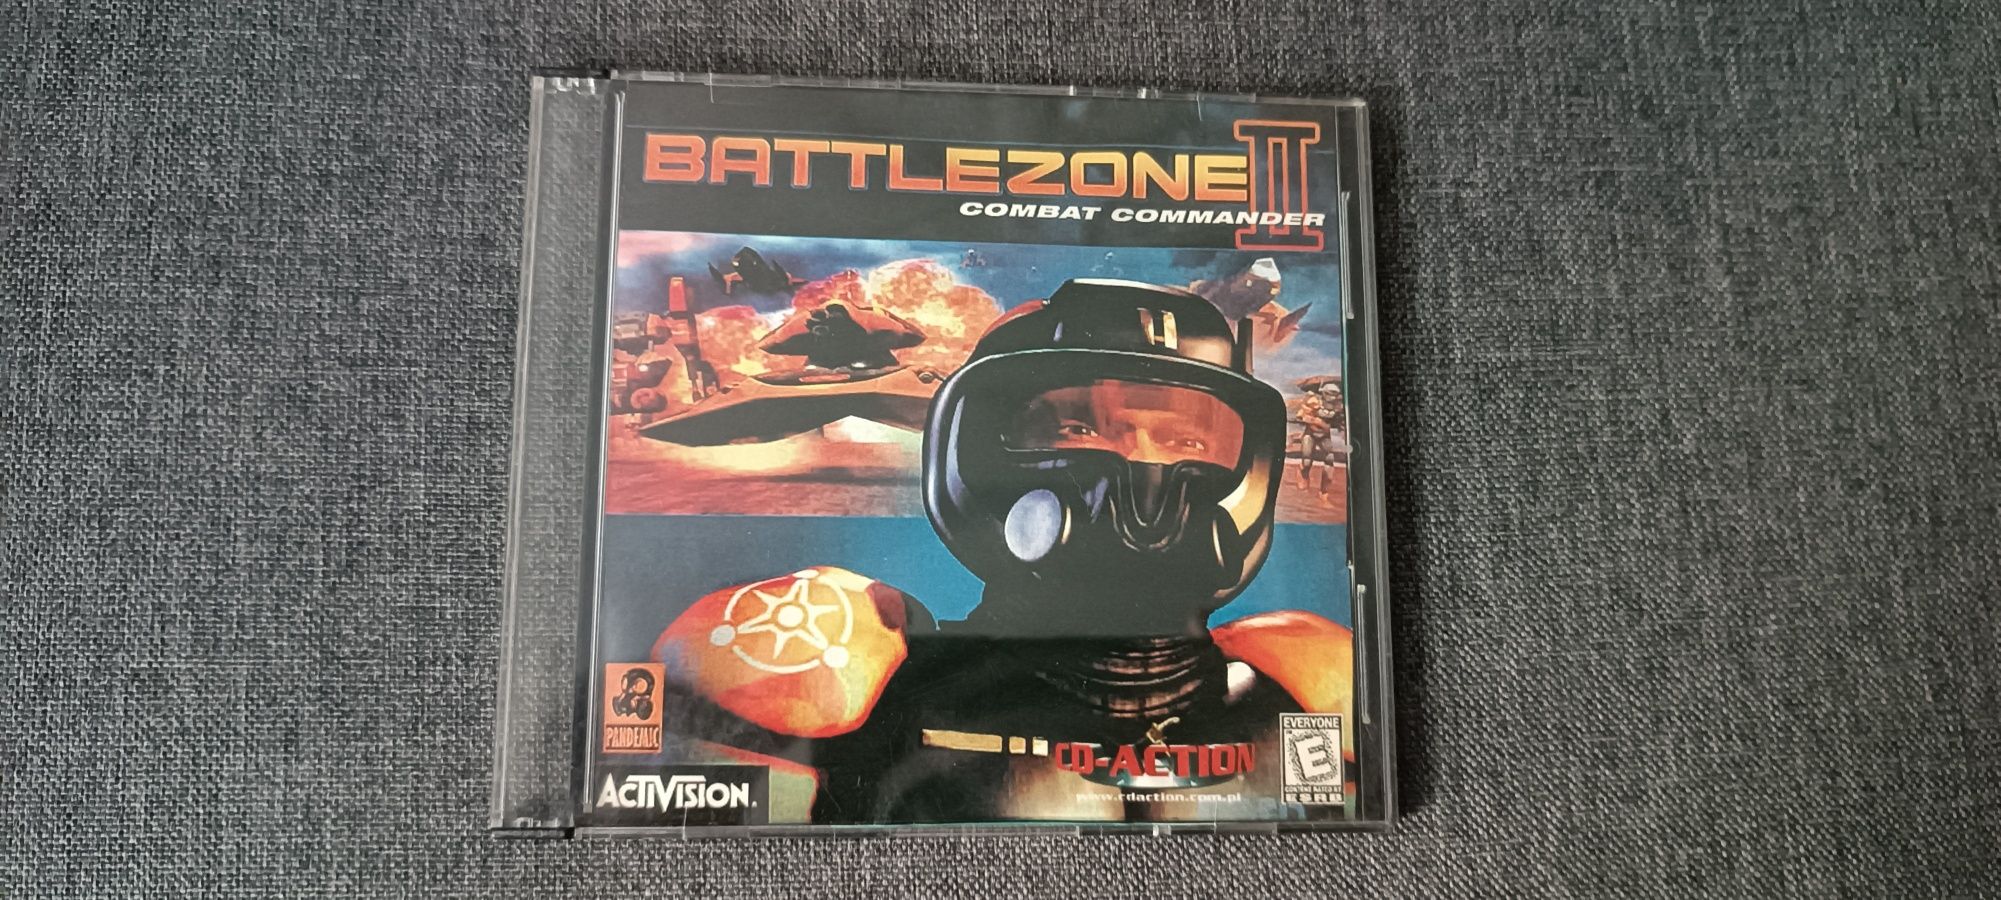 Battlezone 2 combat comander PC